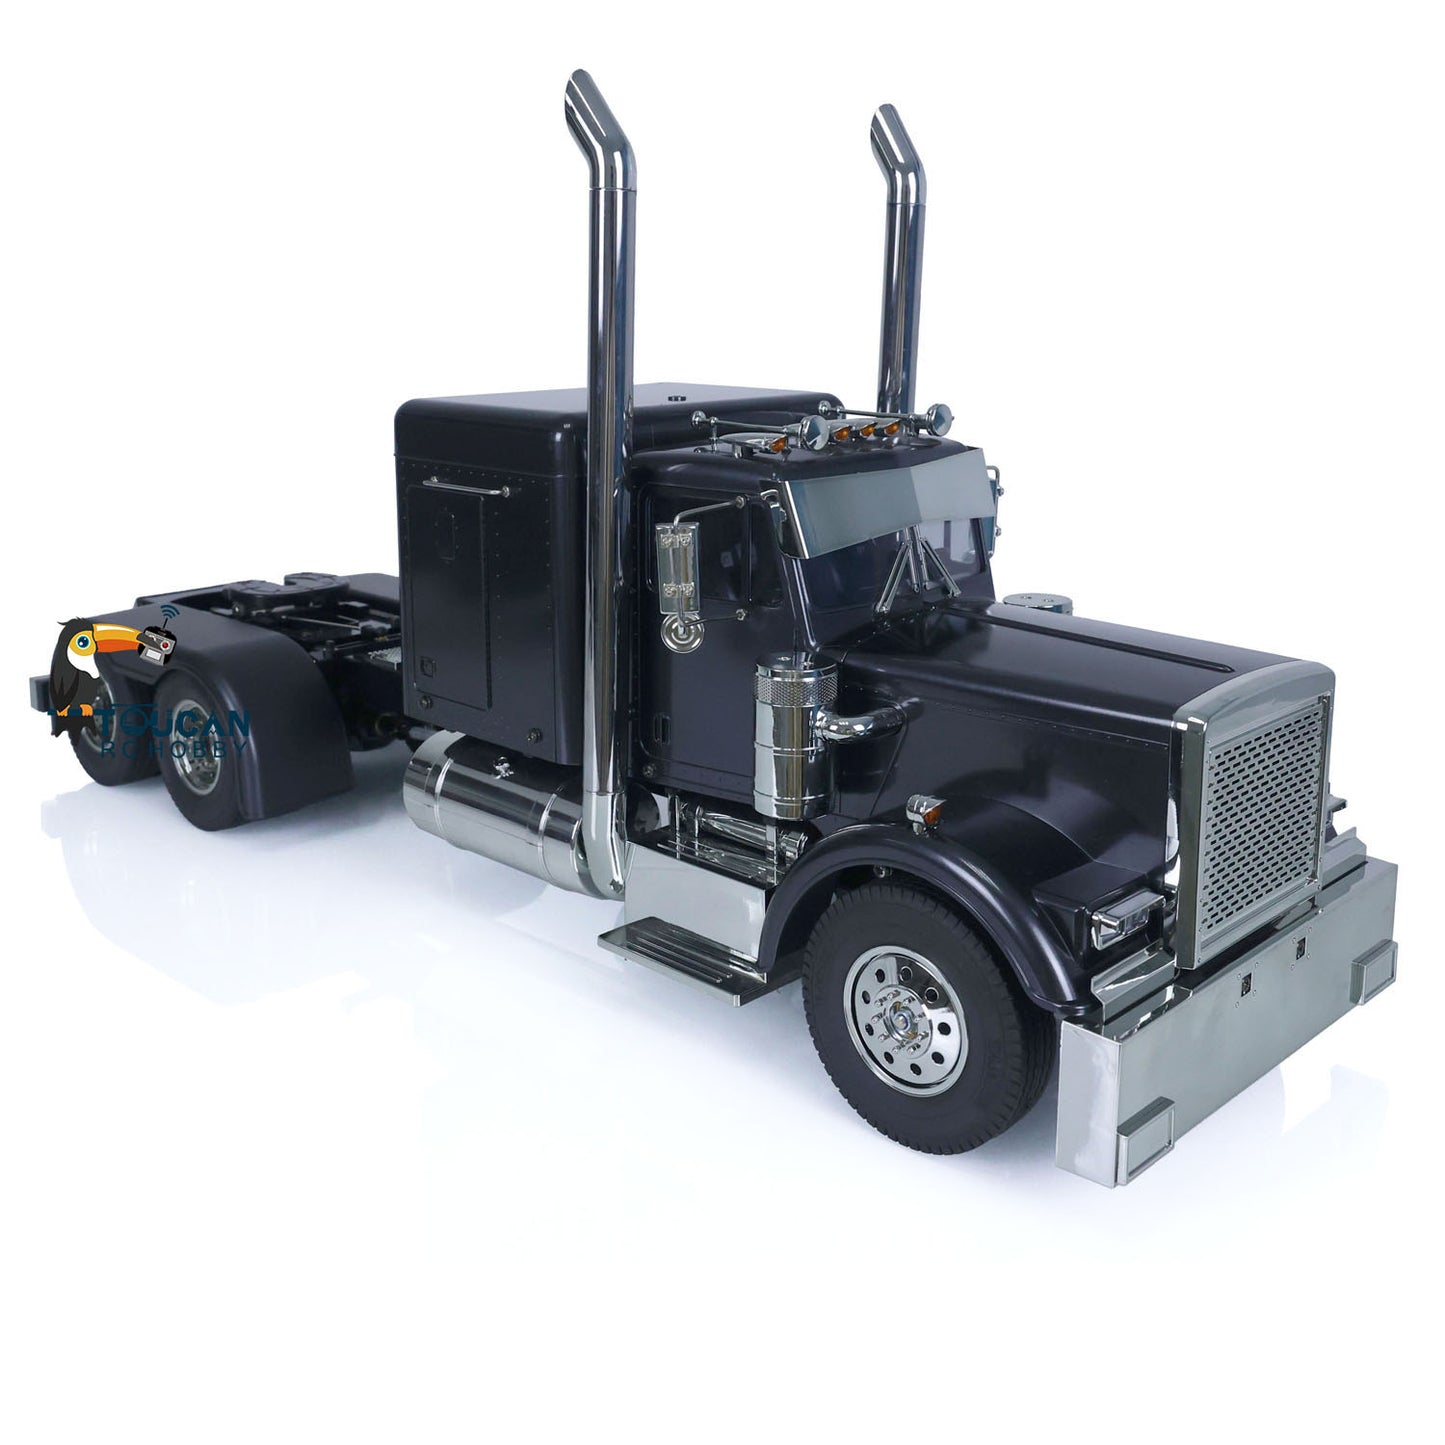 1/14 TAMIYE 6x4 56356 Grand Hauler RC RTR Tractor Truck Remote Control Assembled Car W/ Light Sound FS I6S System Motor Servo